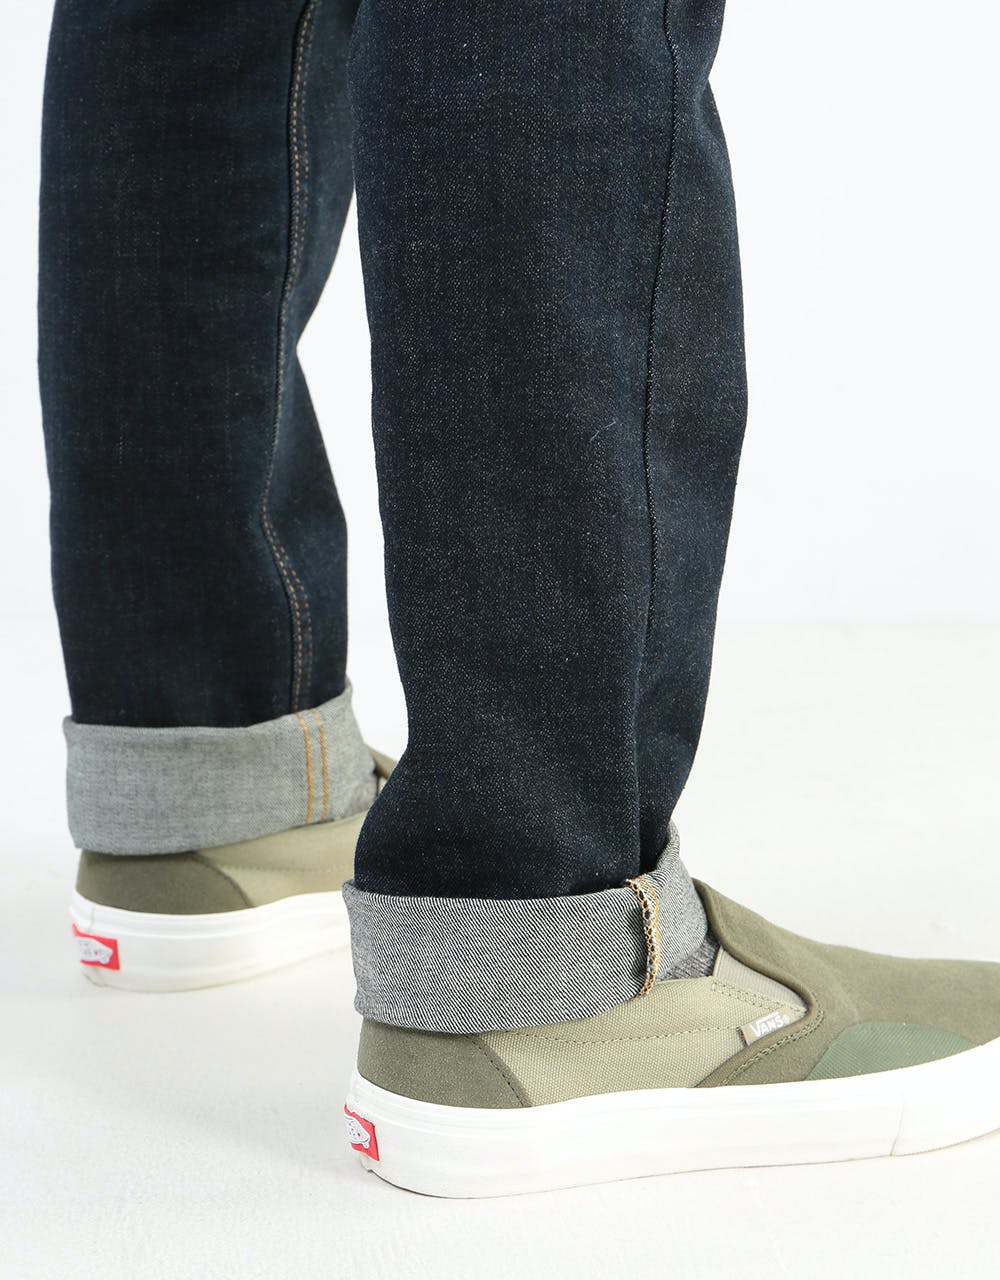 Vans V16 Slim Denim Jeans - Indigo